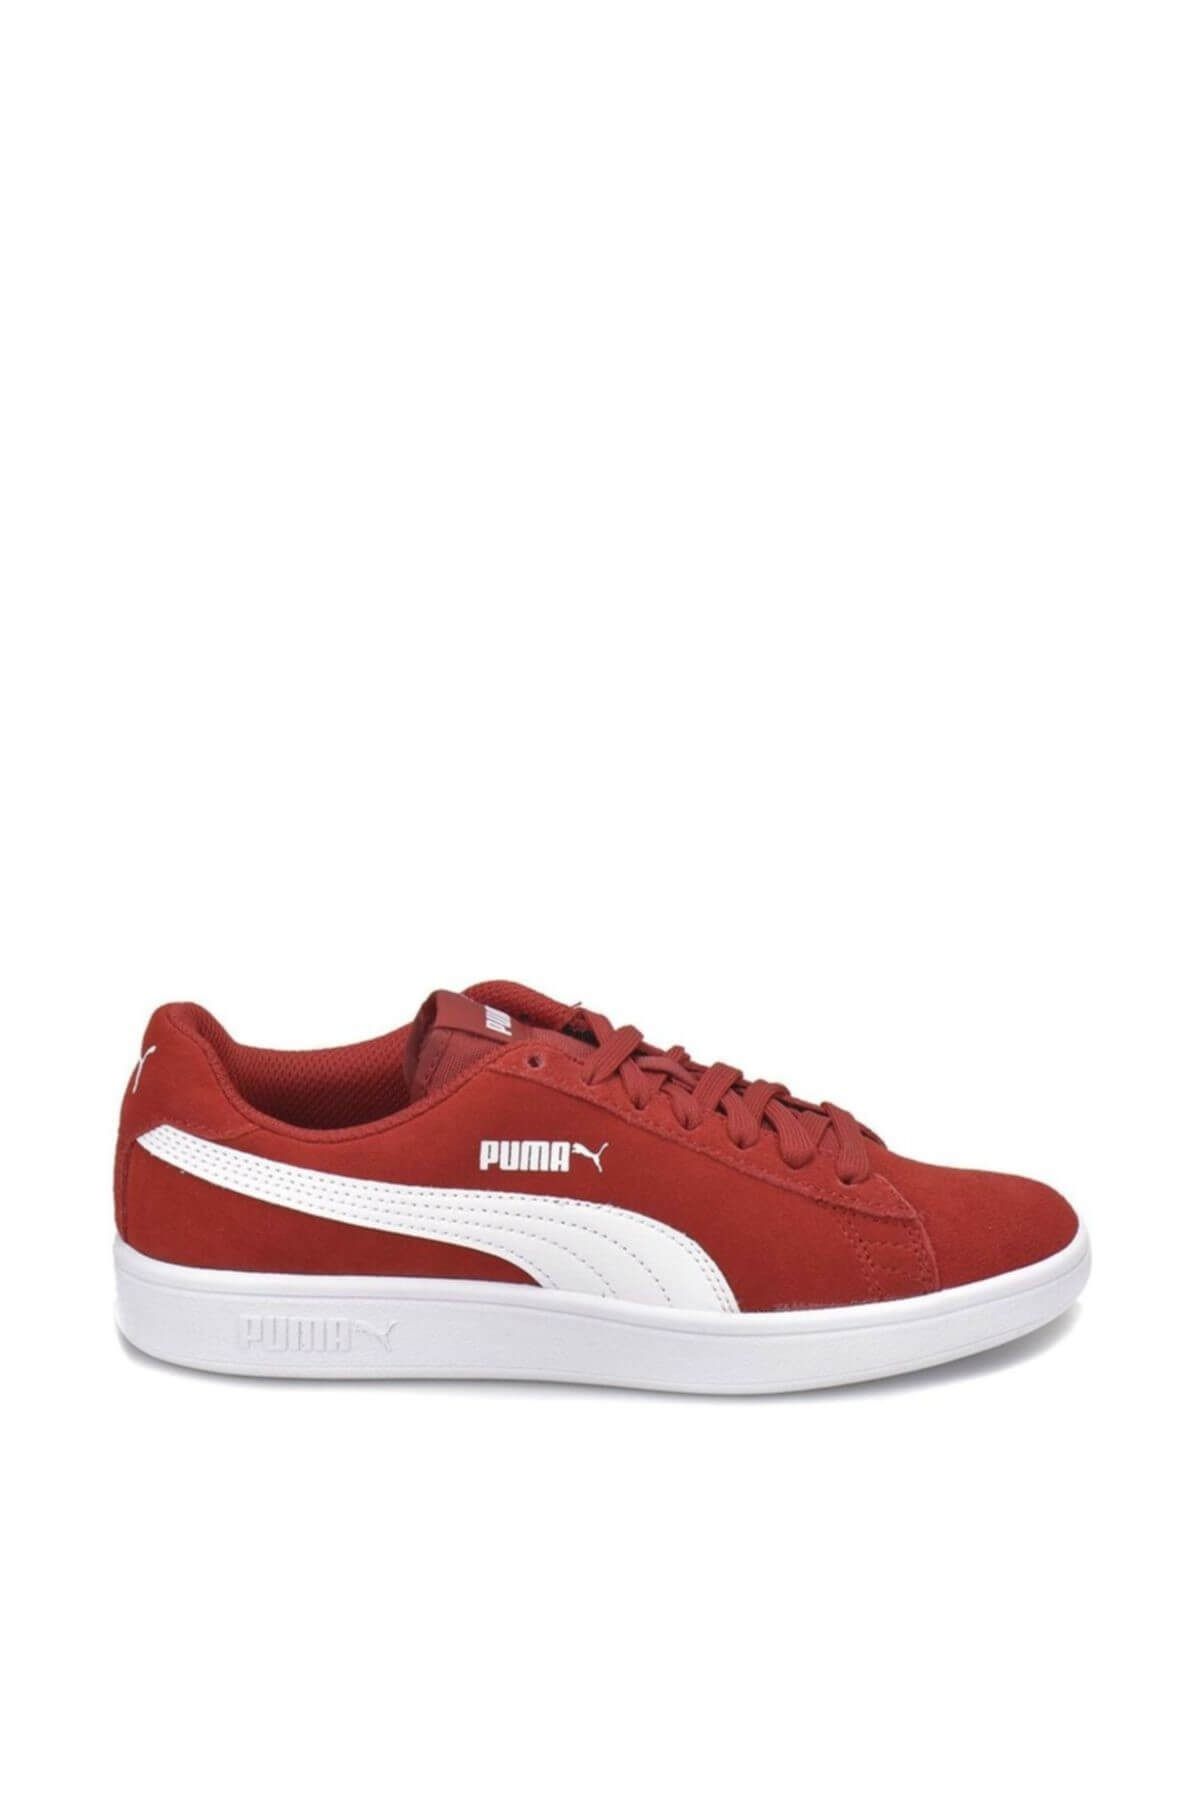 Puma SMASH V2 Kırmızı BEYAZ Unisex Sneaker 100325490